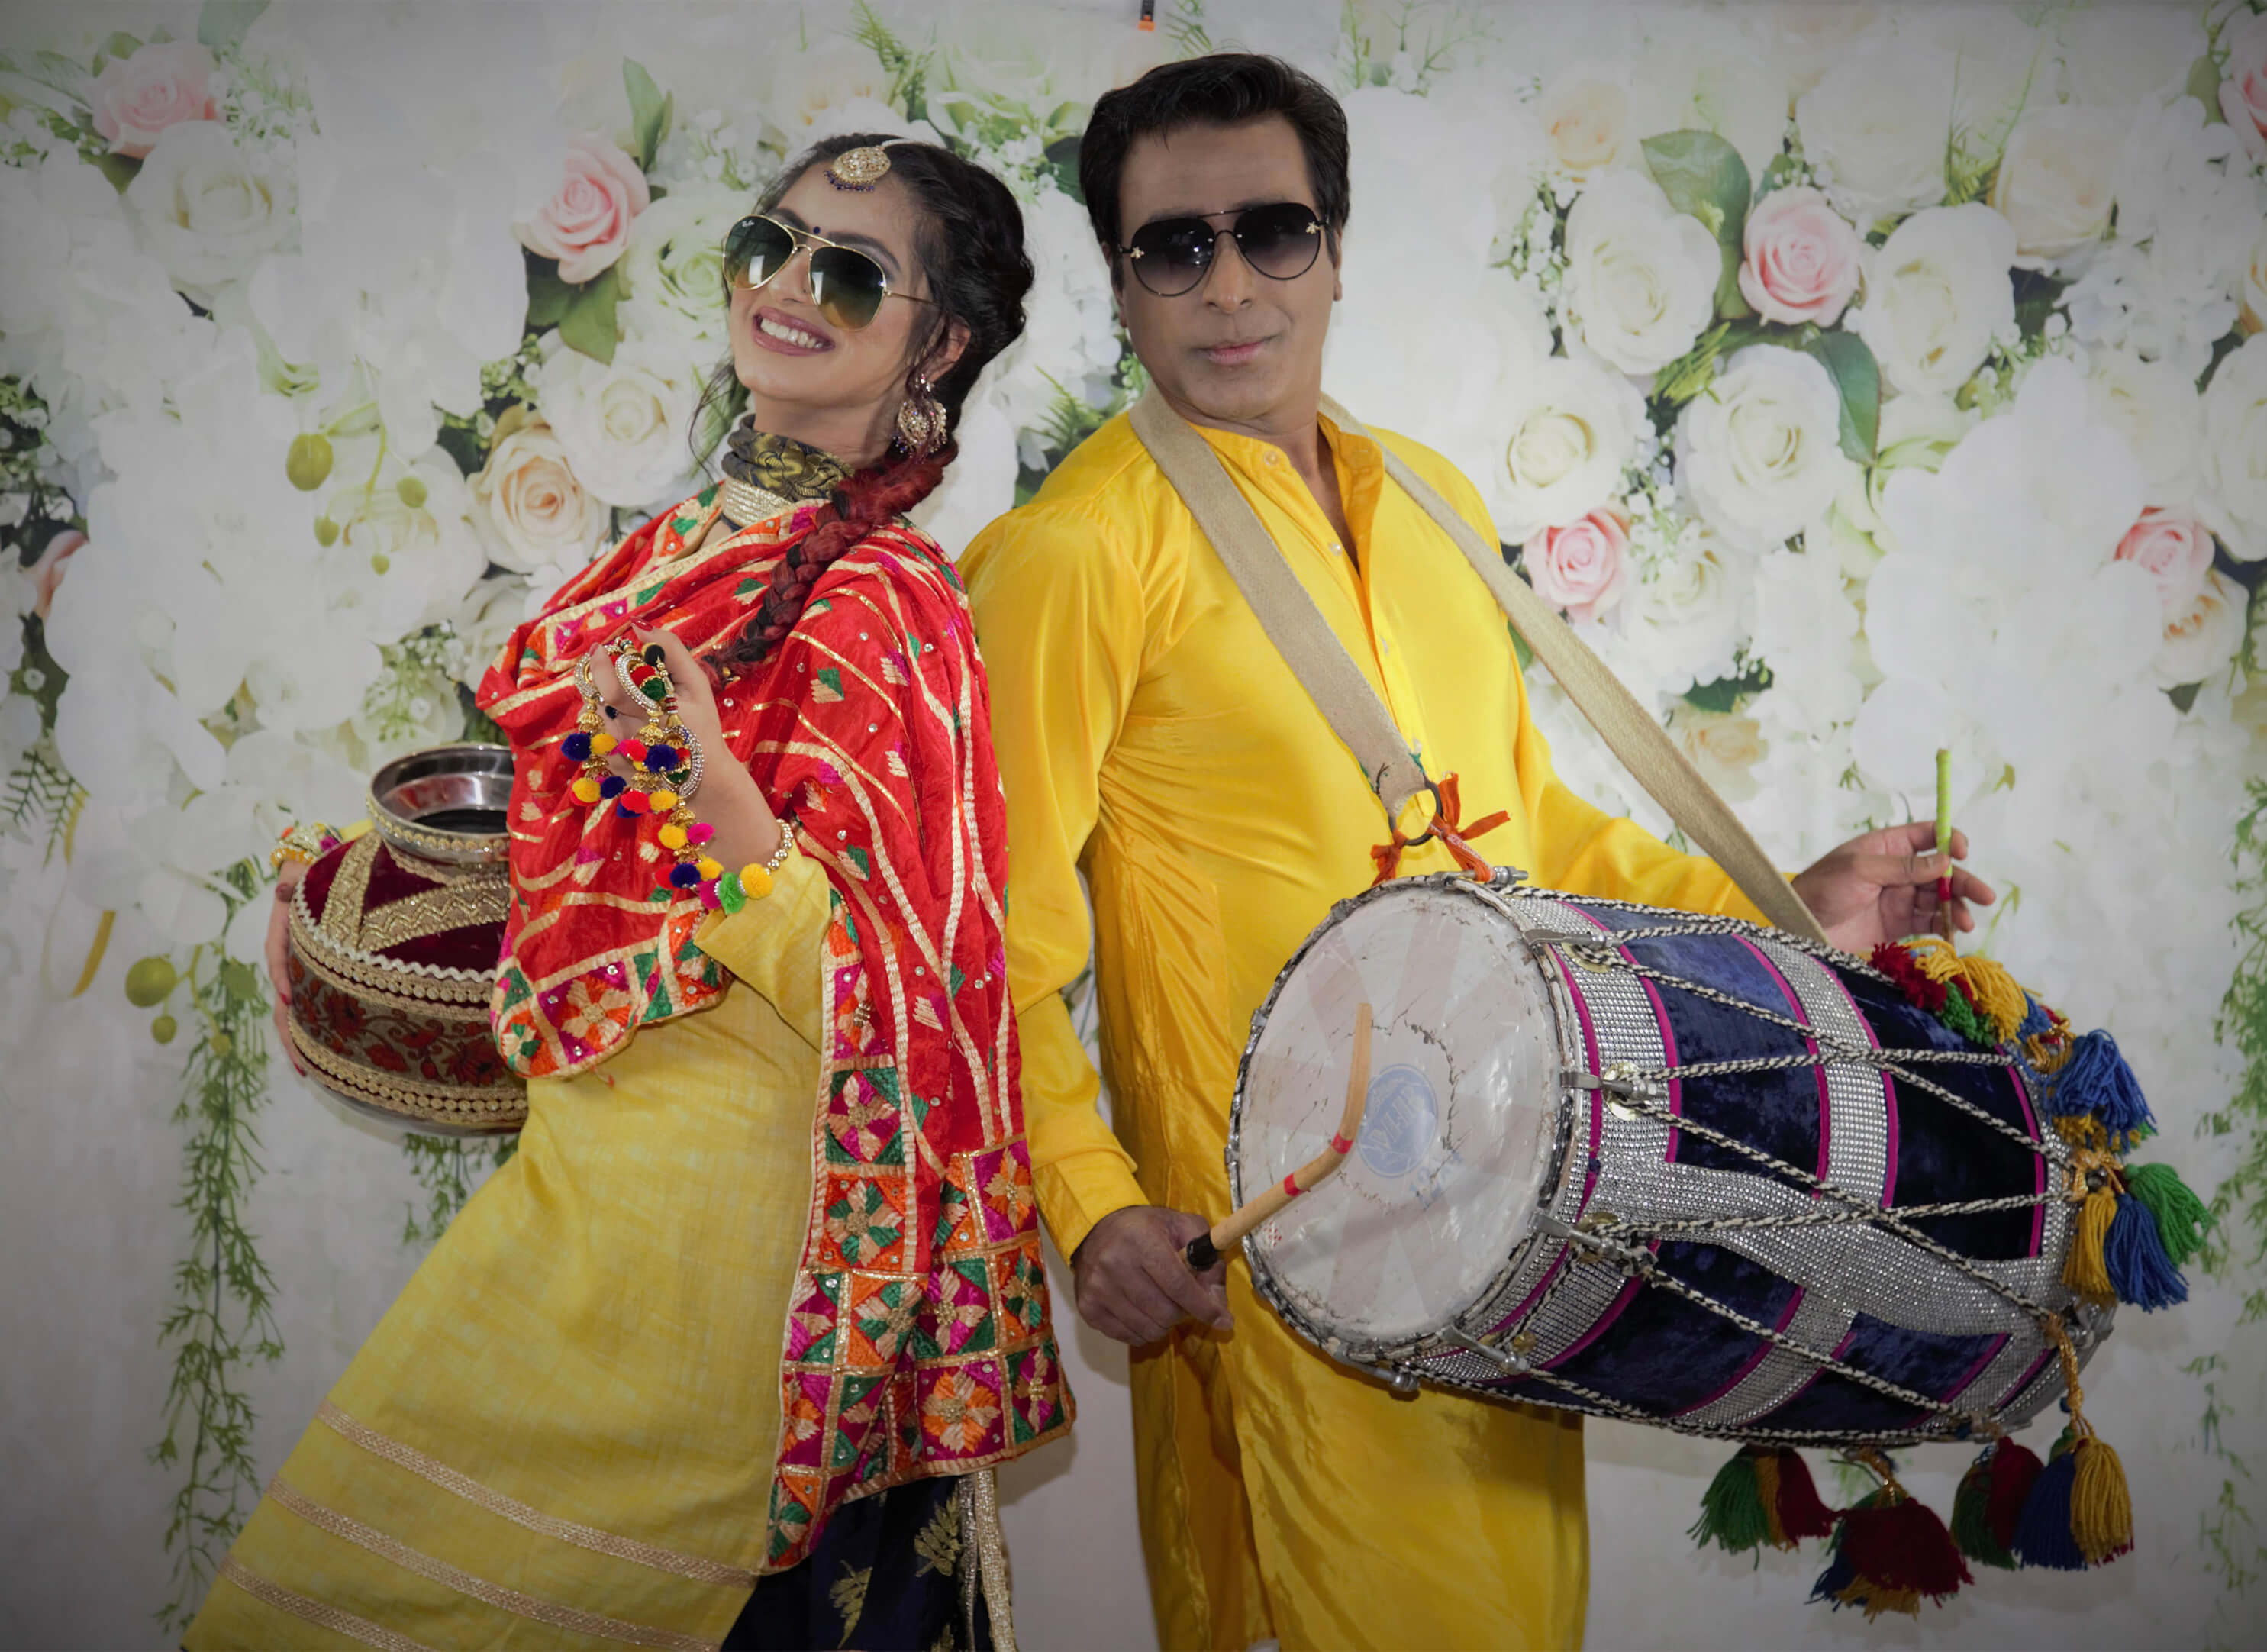 Punjabi Music Star Balvir Boparai Continues His Entertainment Journey With Foray Into Films